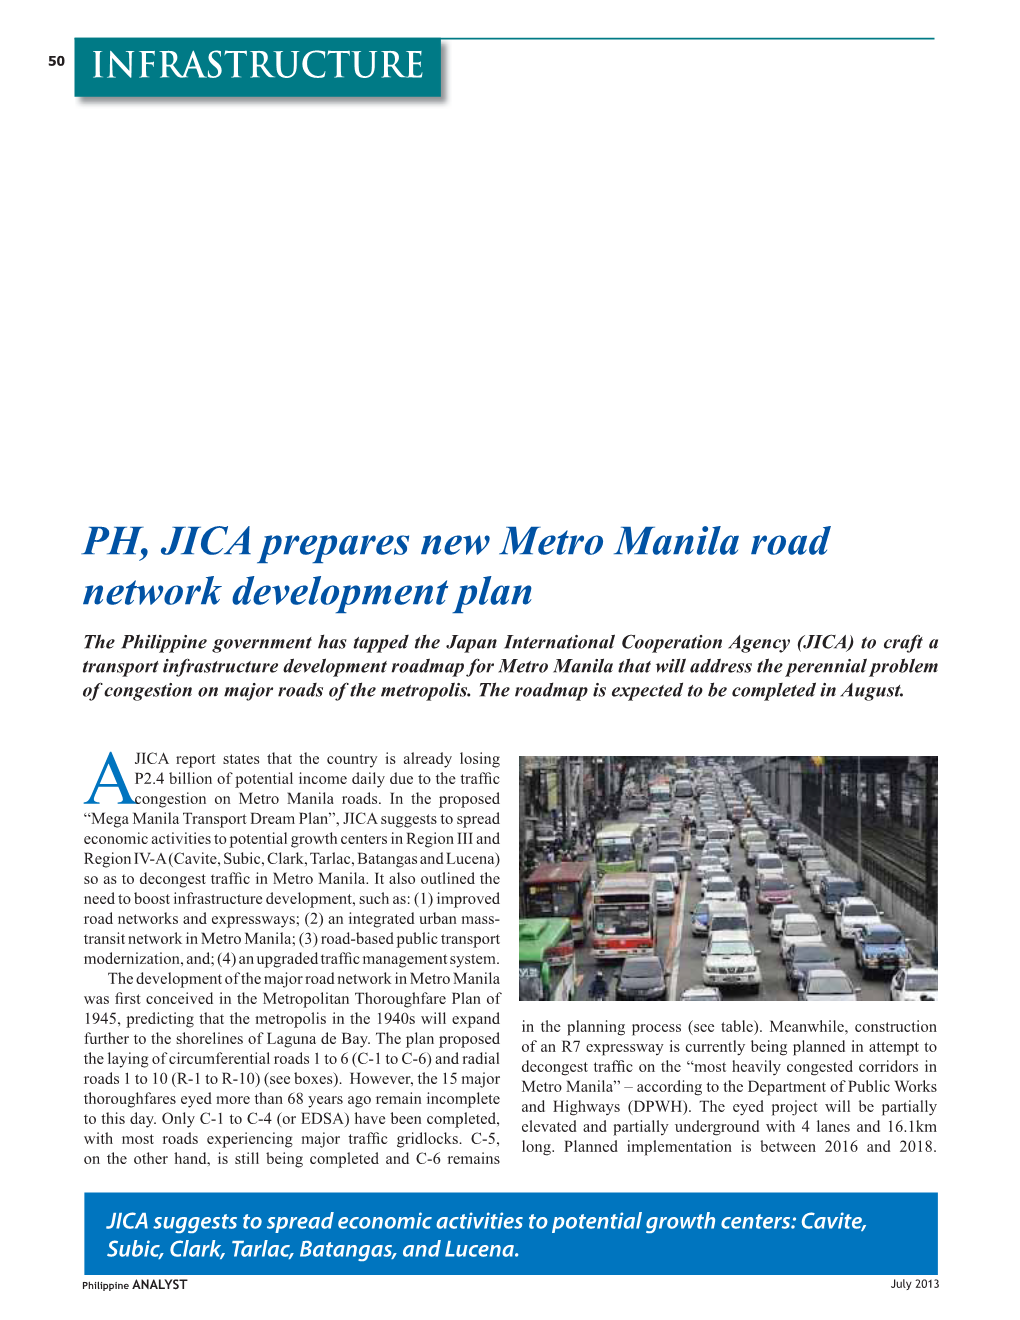 PH, JICA Prepares New Metro Manila Road Network Development Plan